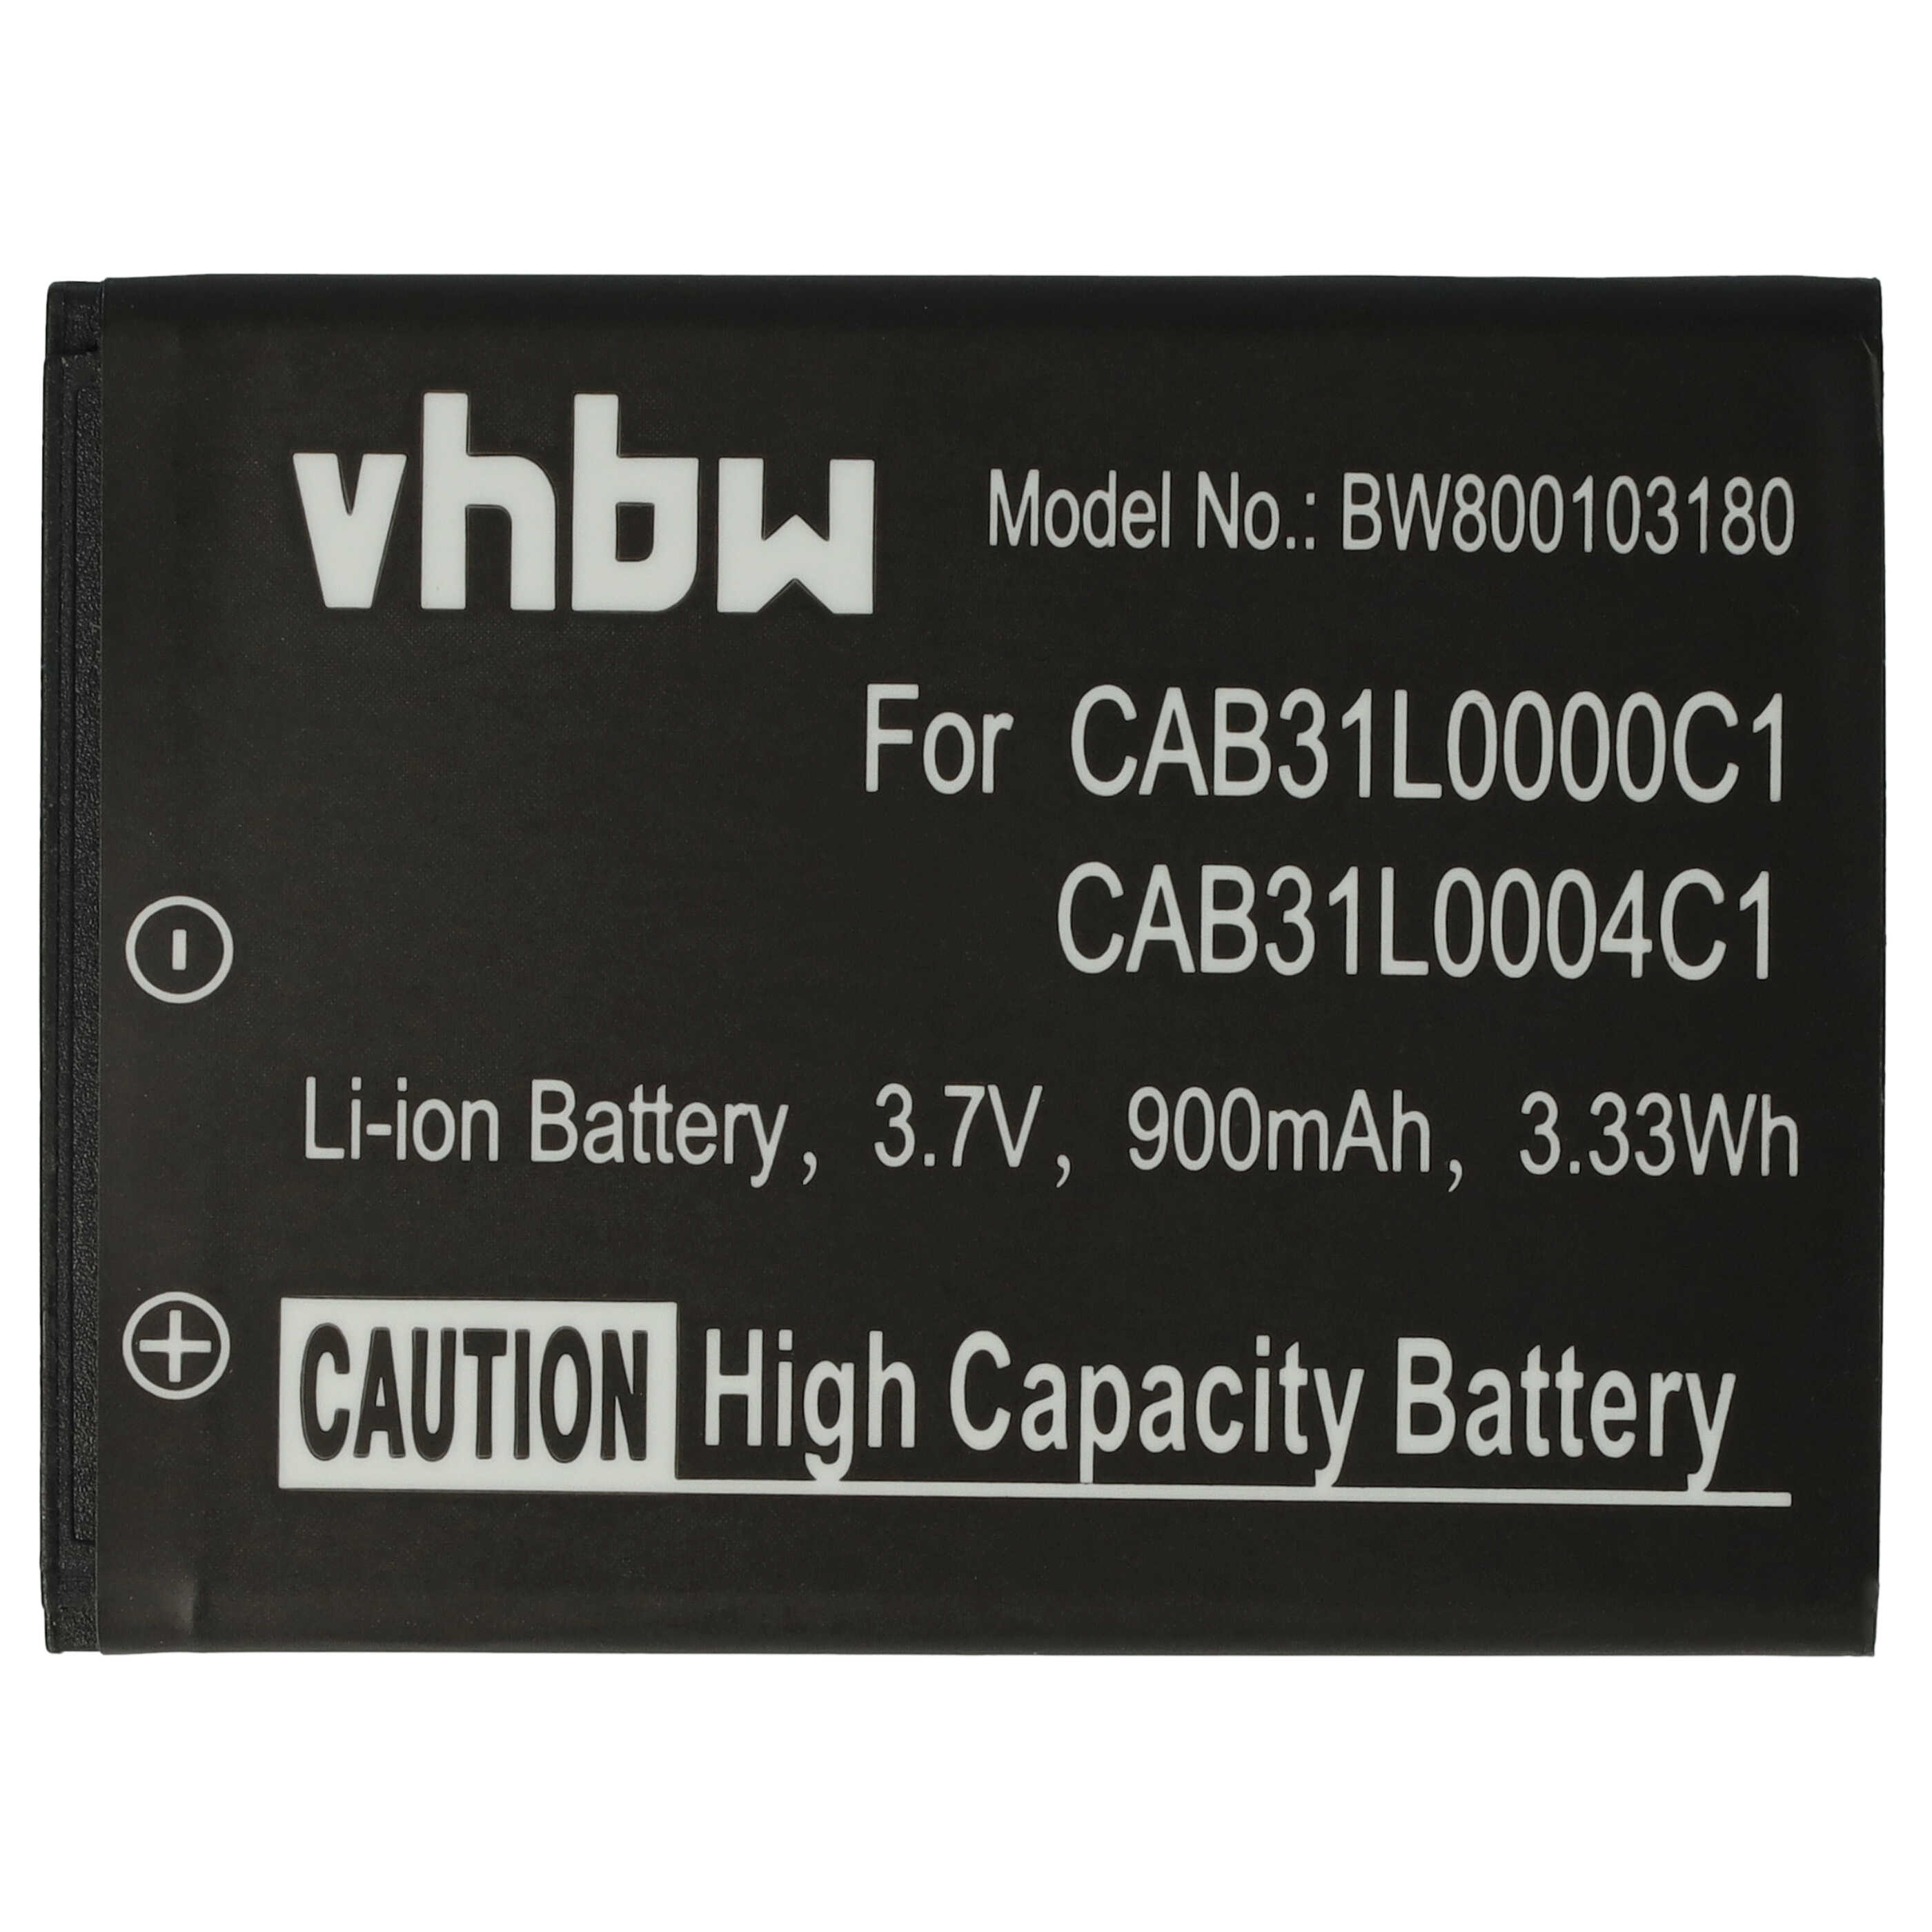 Akumulator Bateria do smartfona komórki zam. Alcatel CAB31L0000C1, CAB31L0000C2 - 900mAh, 3,7V, Li-Ion